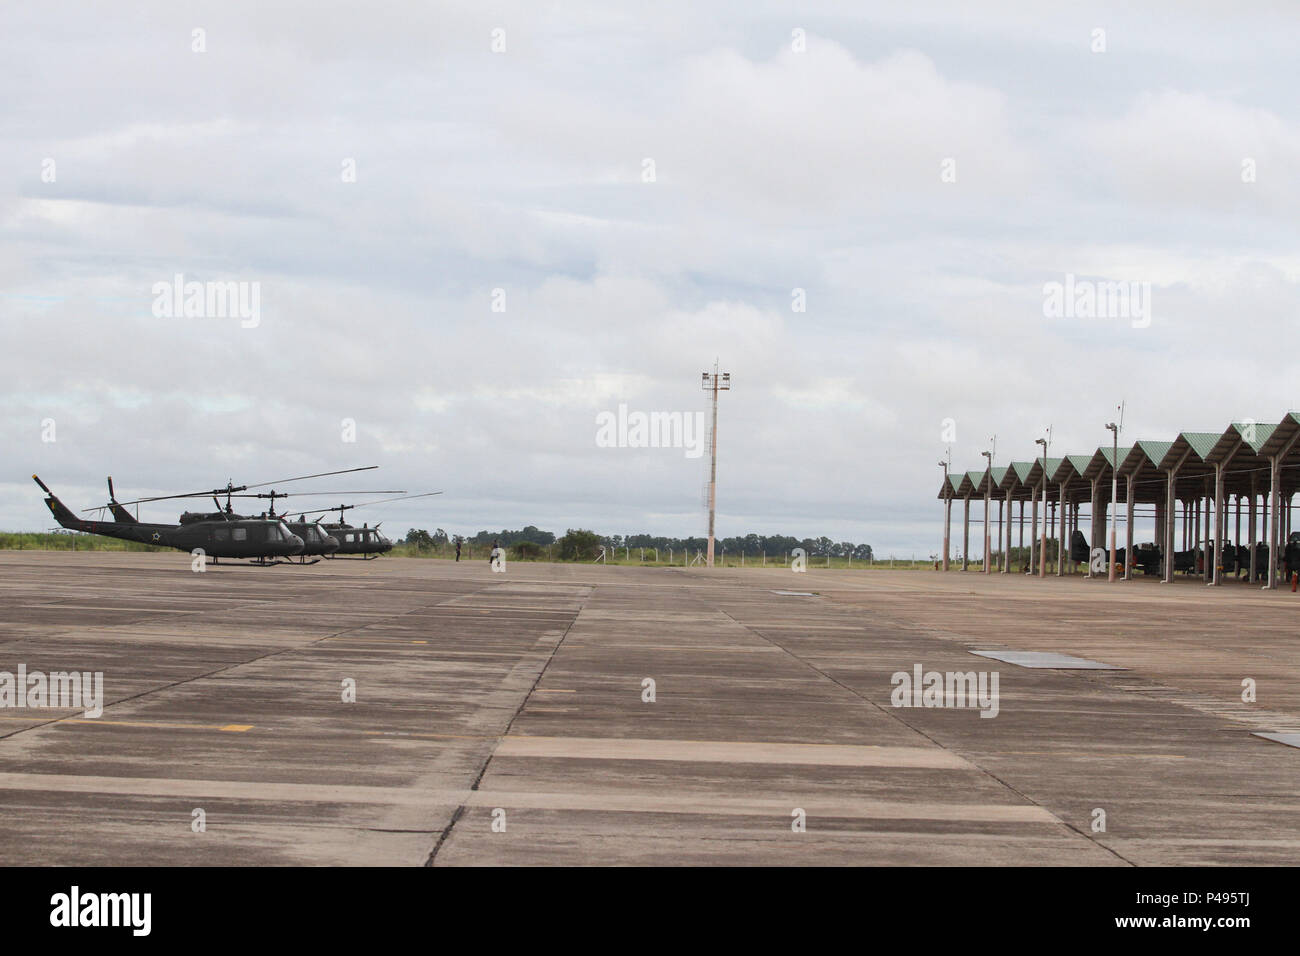 CAMPO GRANDE, MS -27.03.2015 - BASE AÉREA DE CAMPO GRANDE - Base aérea de Campo Grande, helicopteros e o Avião de Transporte chamado Amazonas. (Foto: Gustavo MAgnusson / Fotoarena) Stock Photo